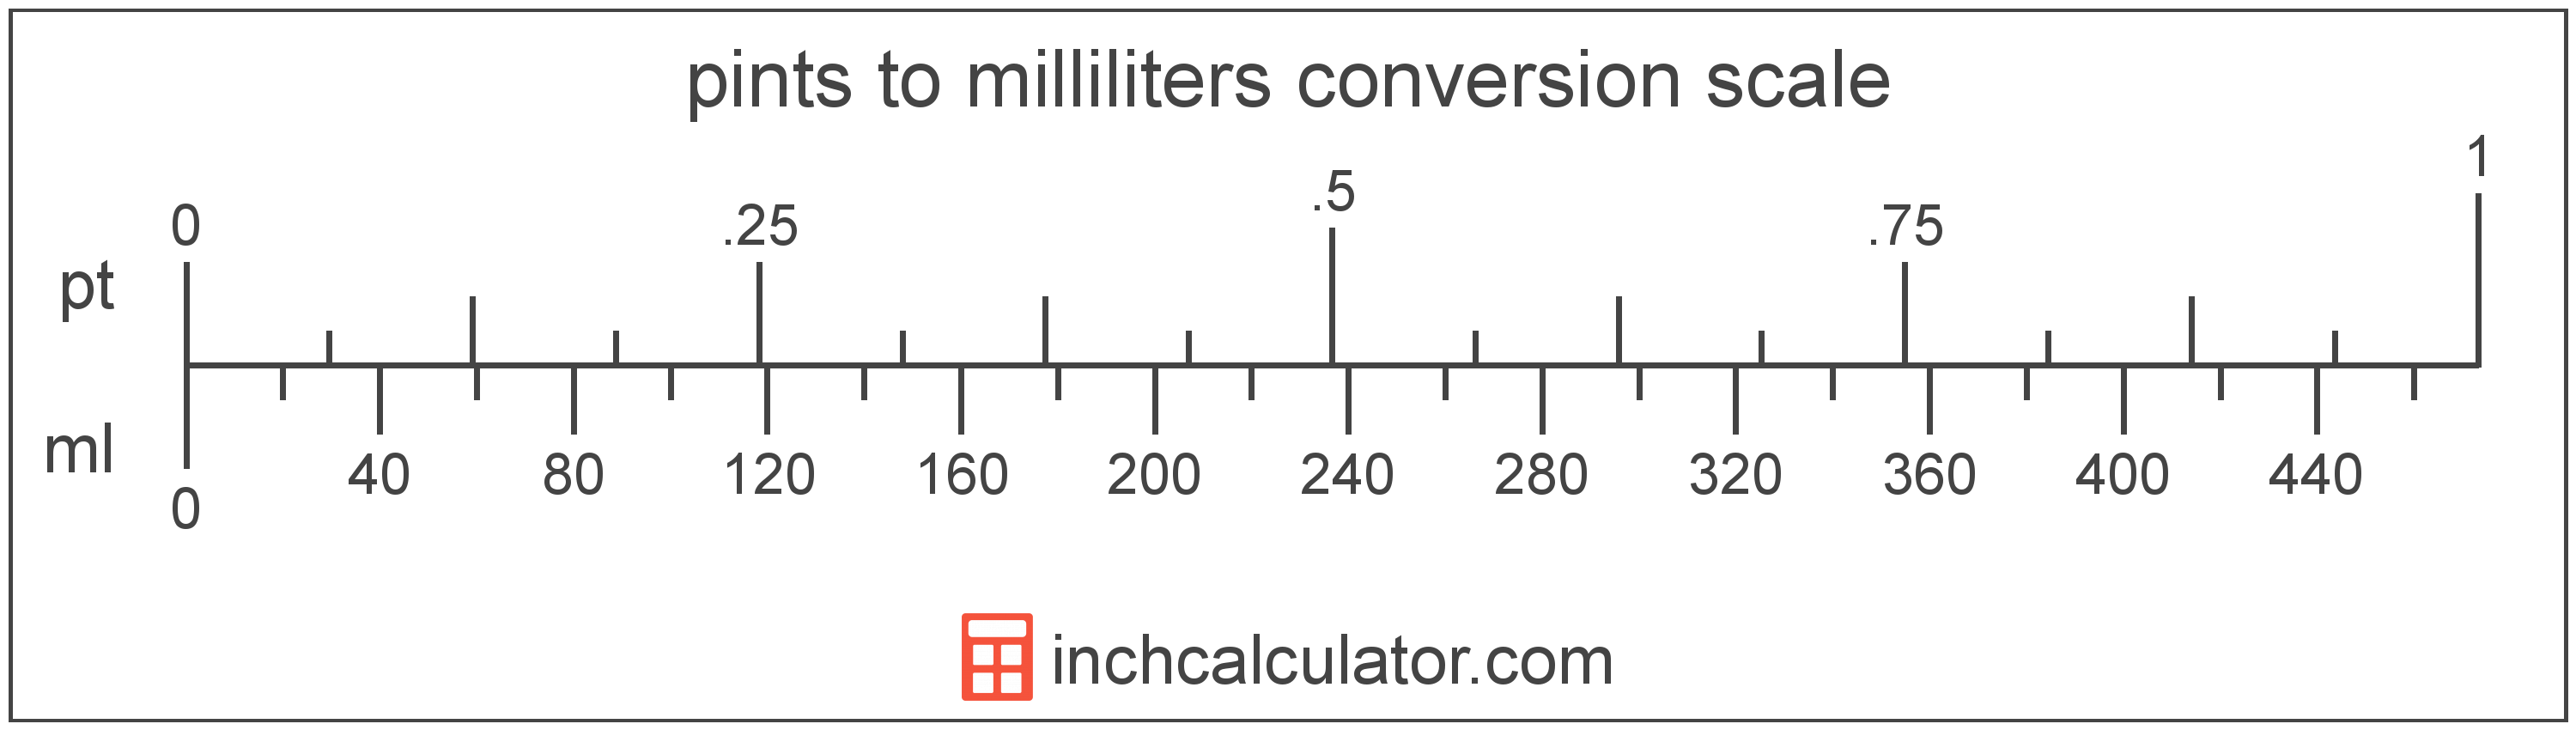 ml liquid conversion chart